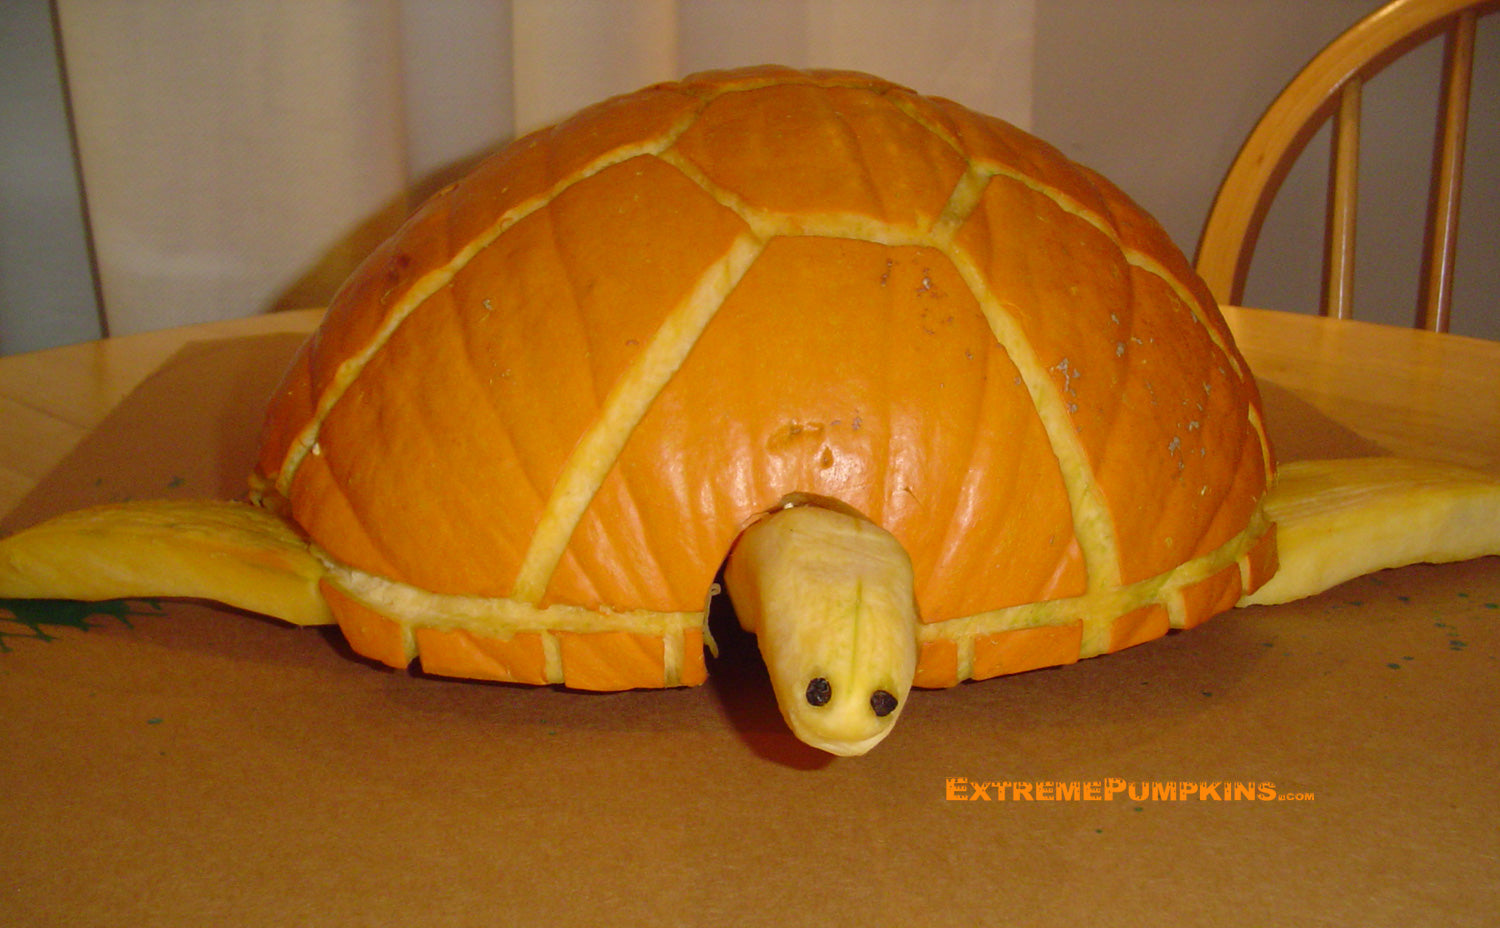 The Sea Turtle Pumpkin